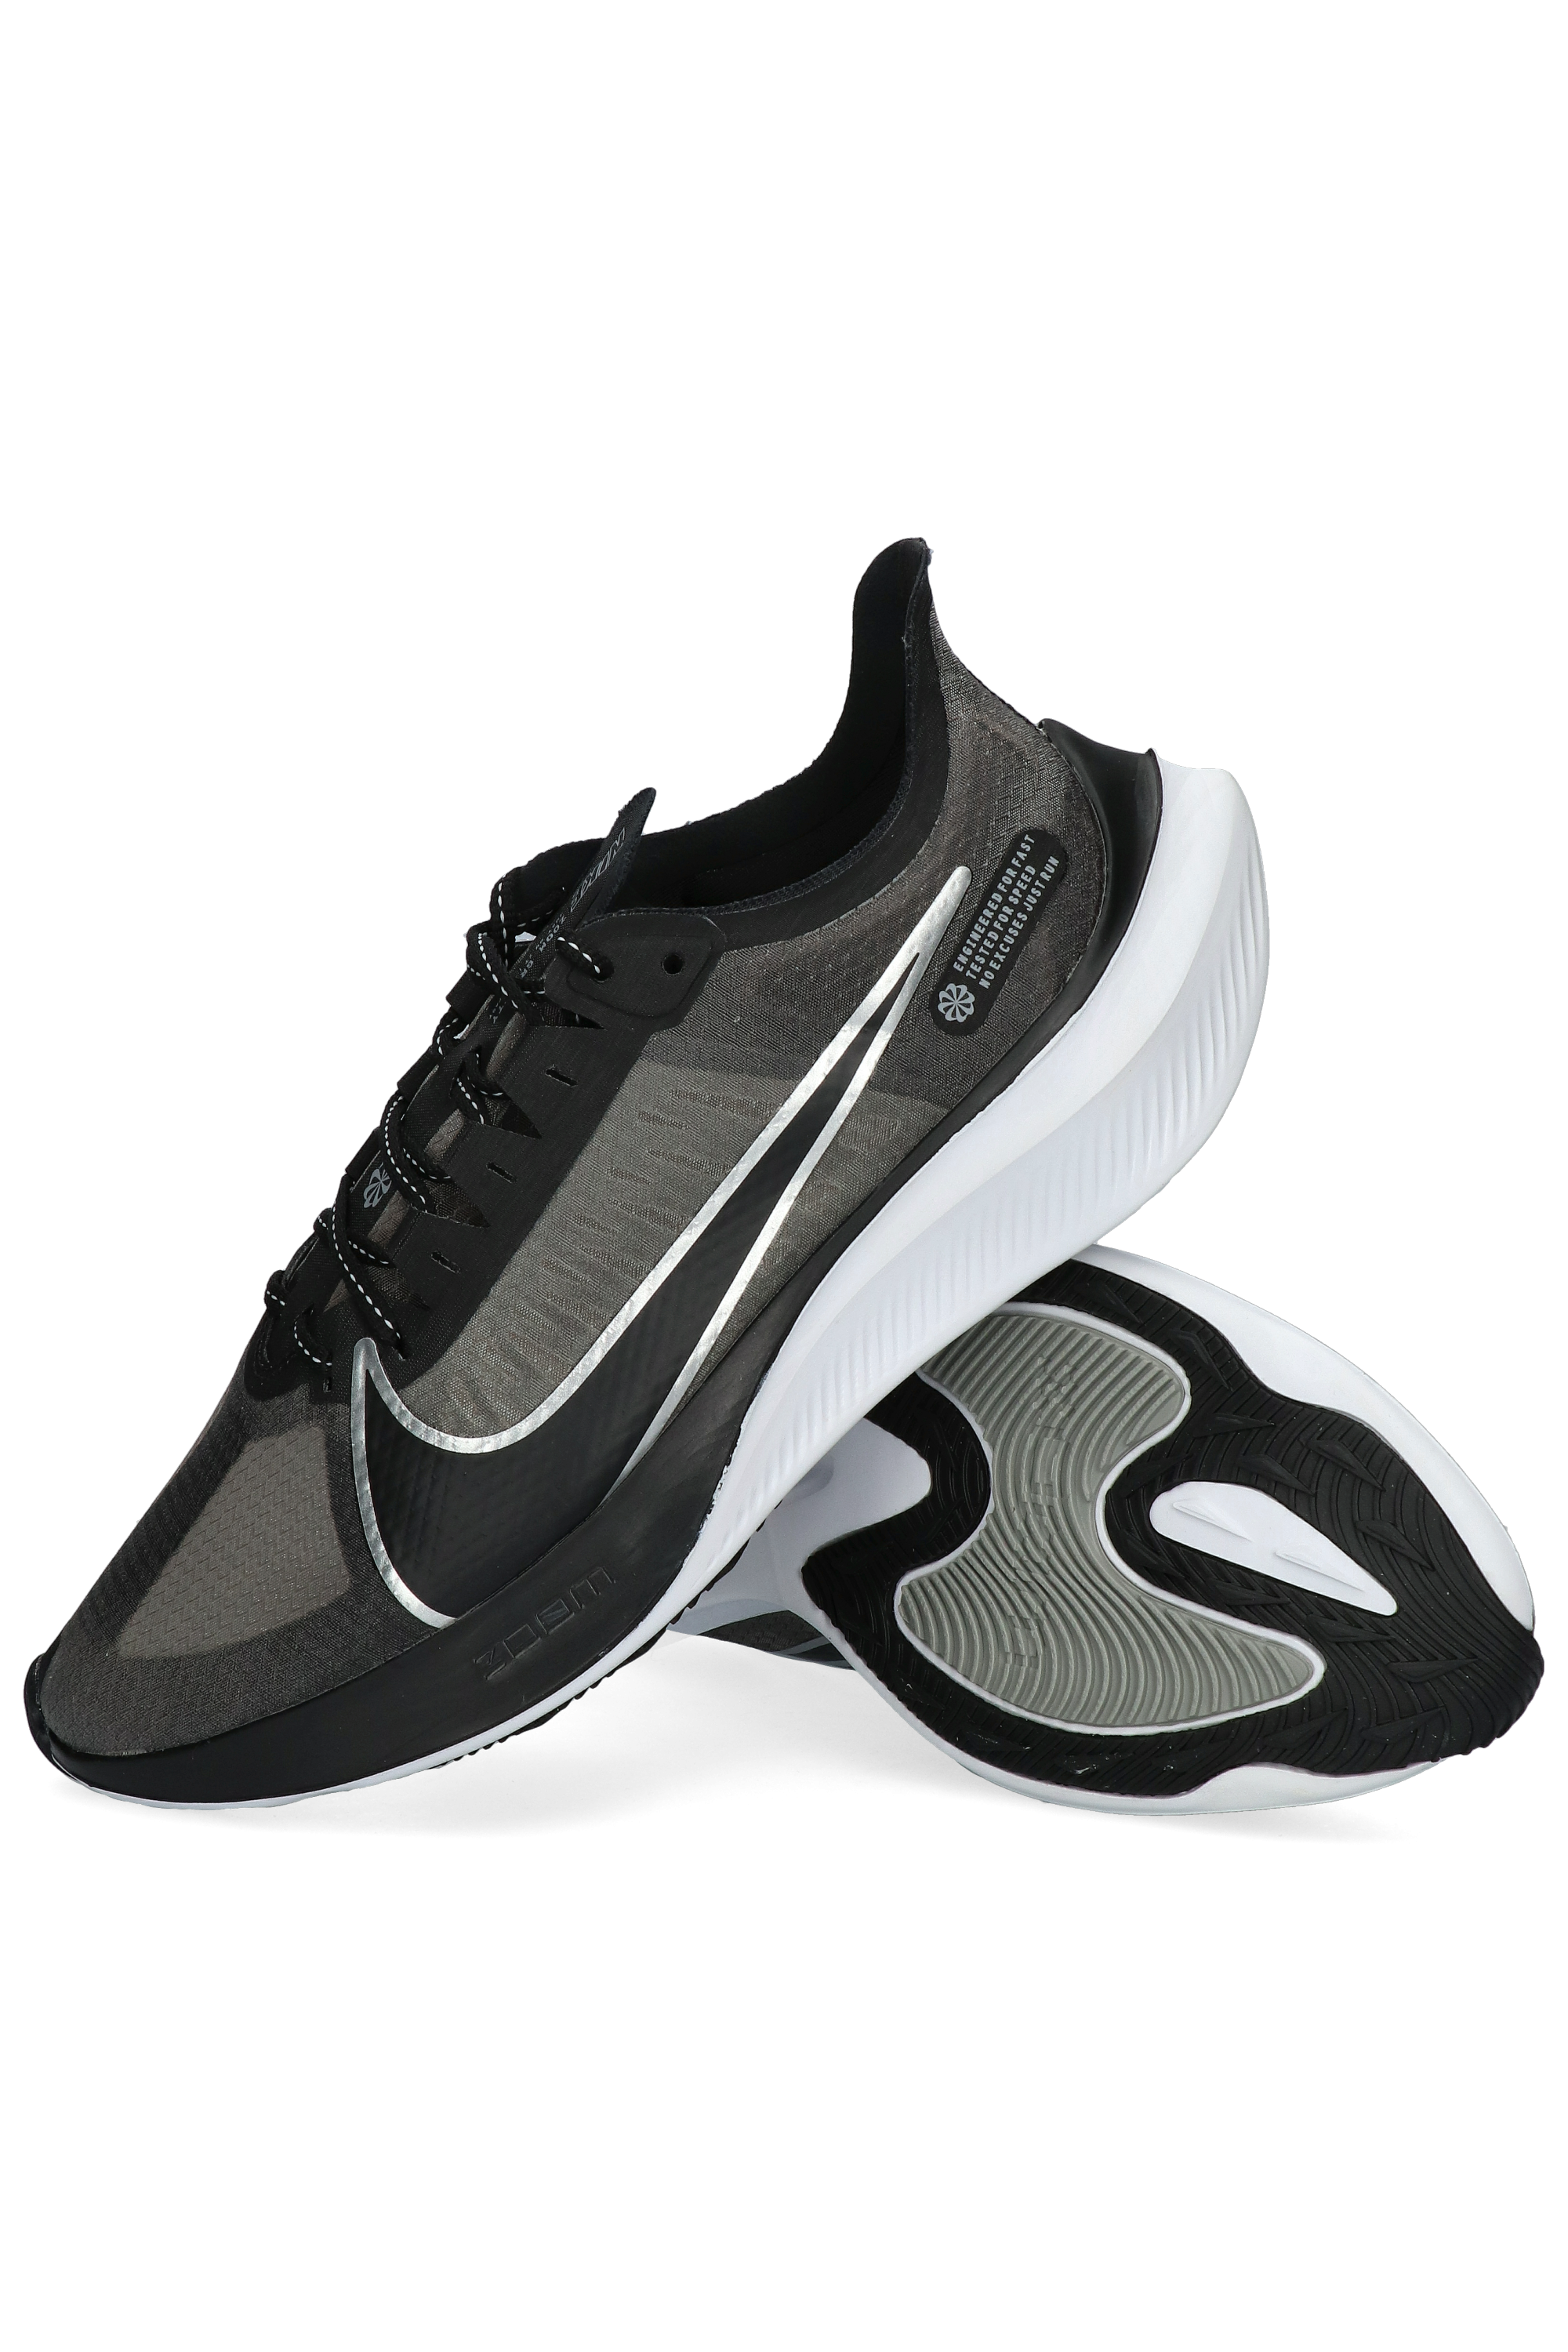 Nike Zoom Gravity | R-GOL.com - Football boots & equipment